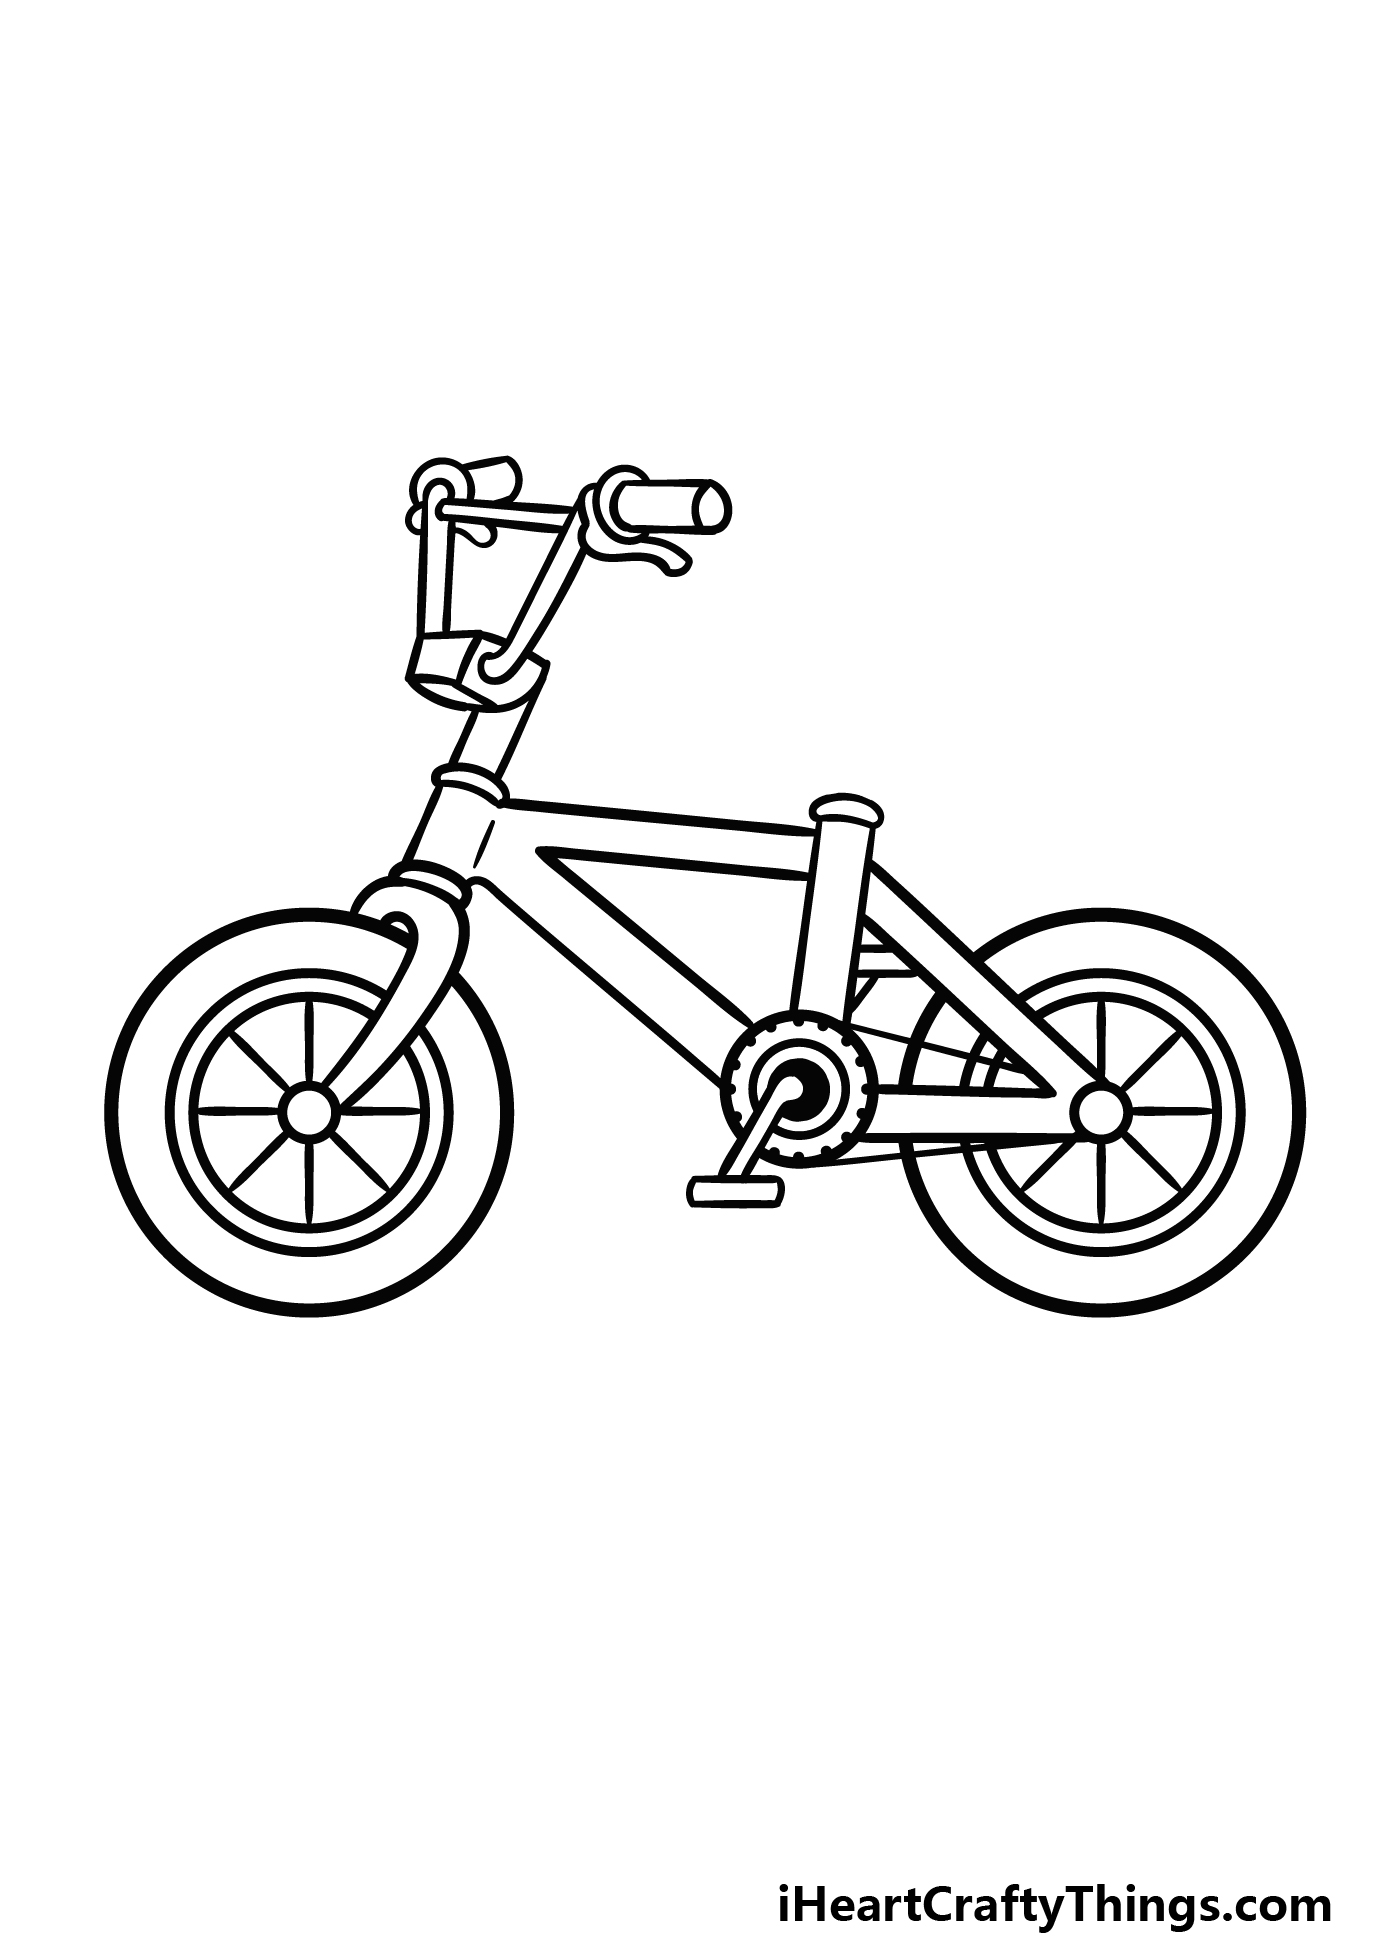 how to draw a cartoon bike step 5